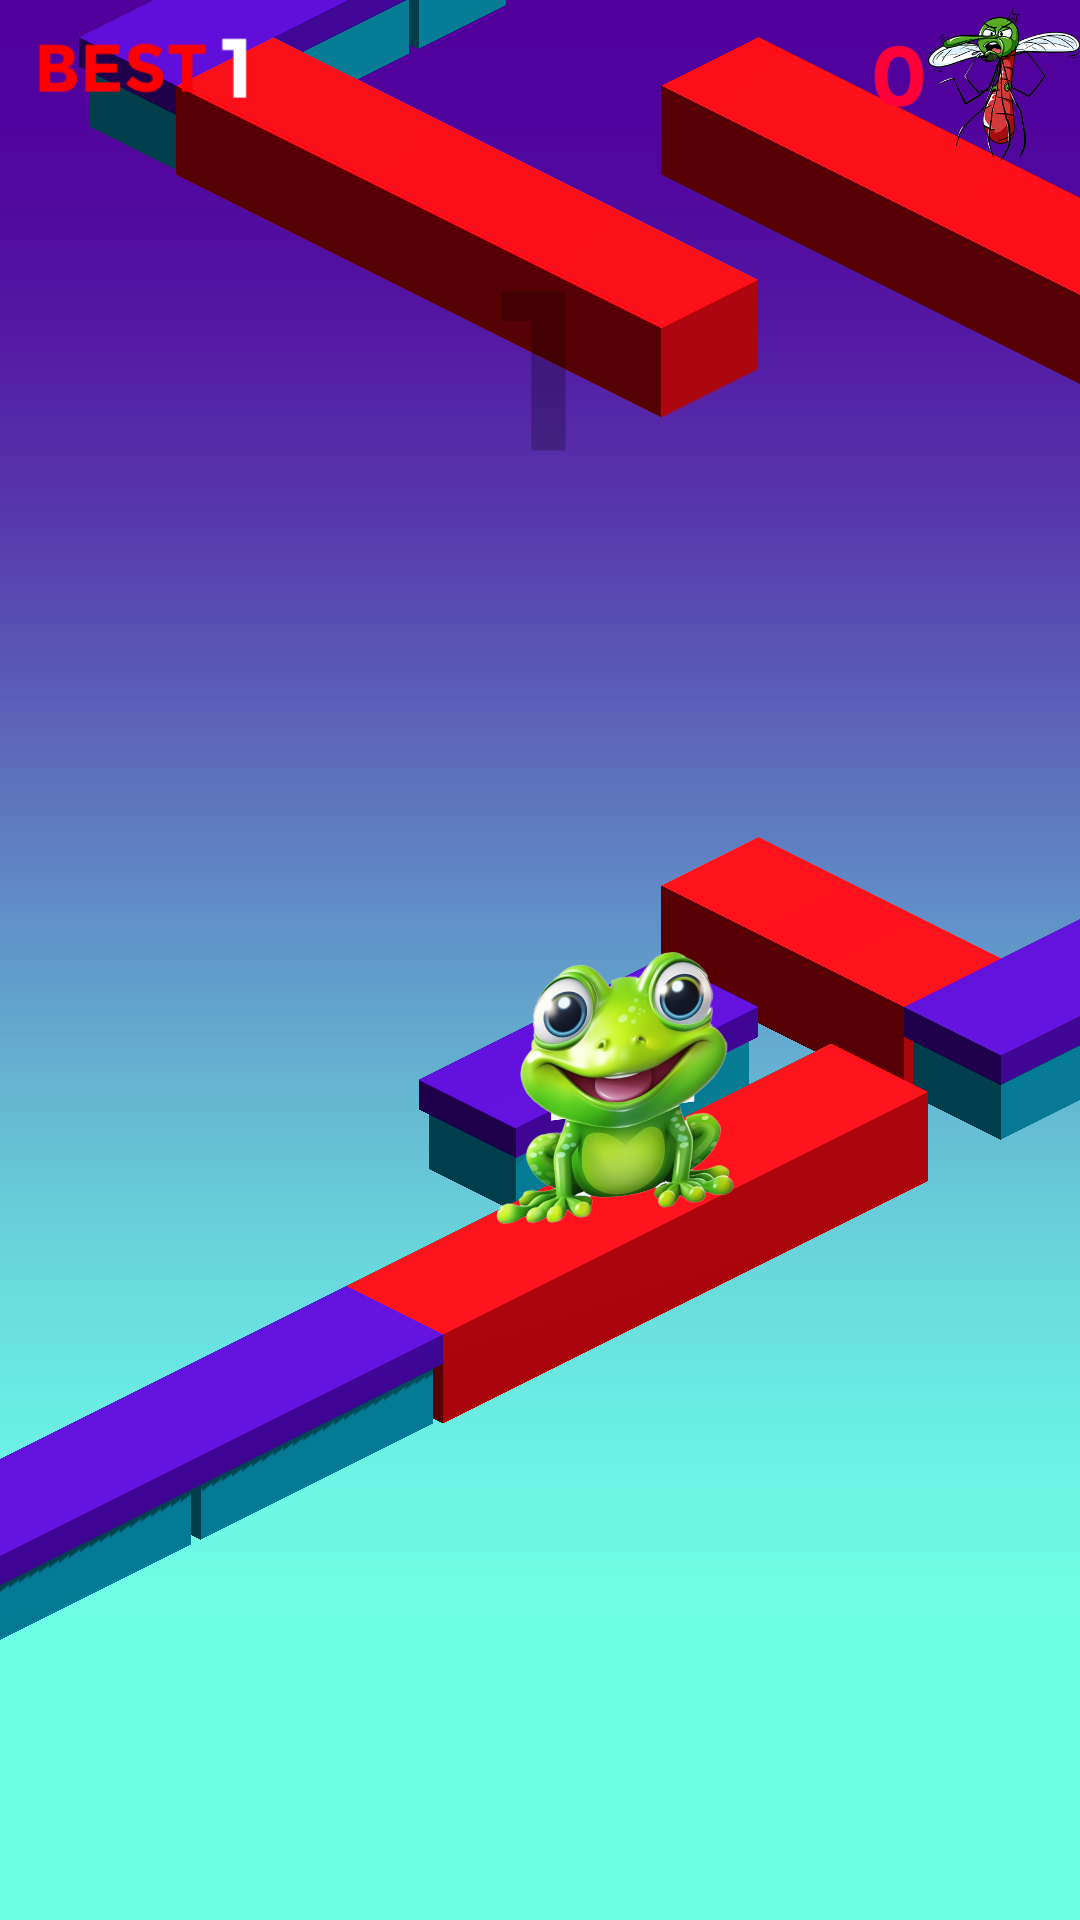 Frog Hustles 게임 스크린 샷